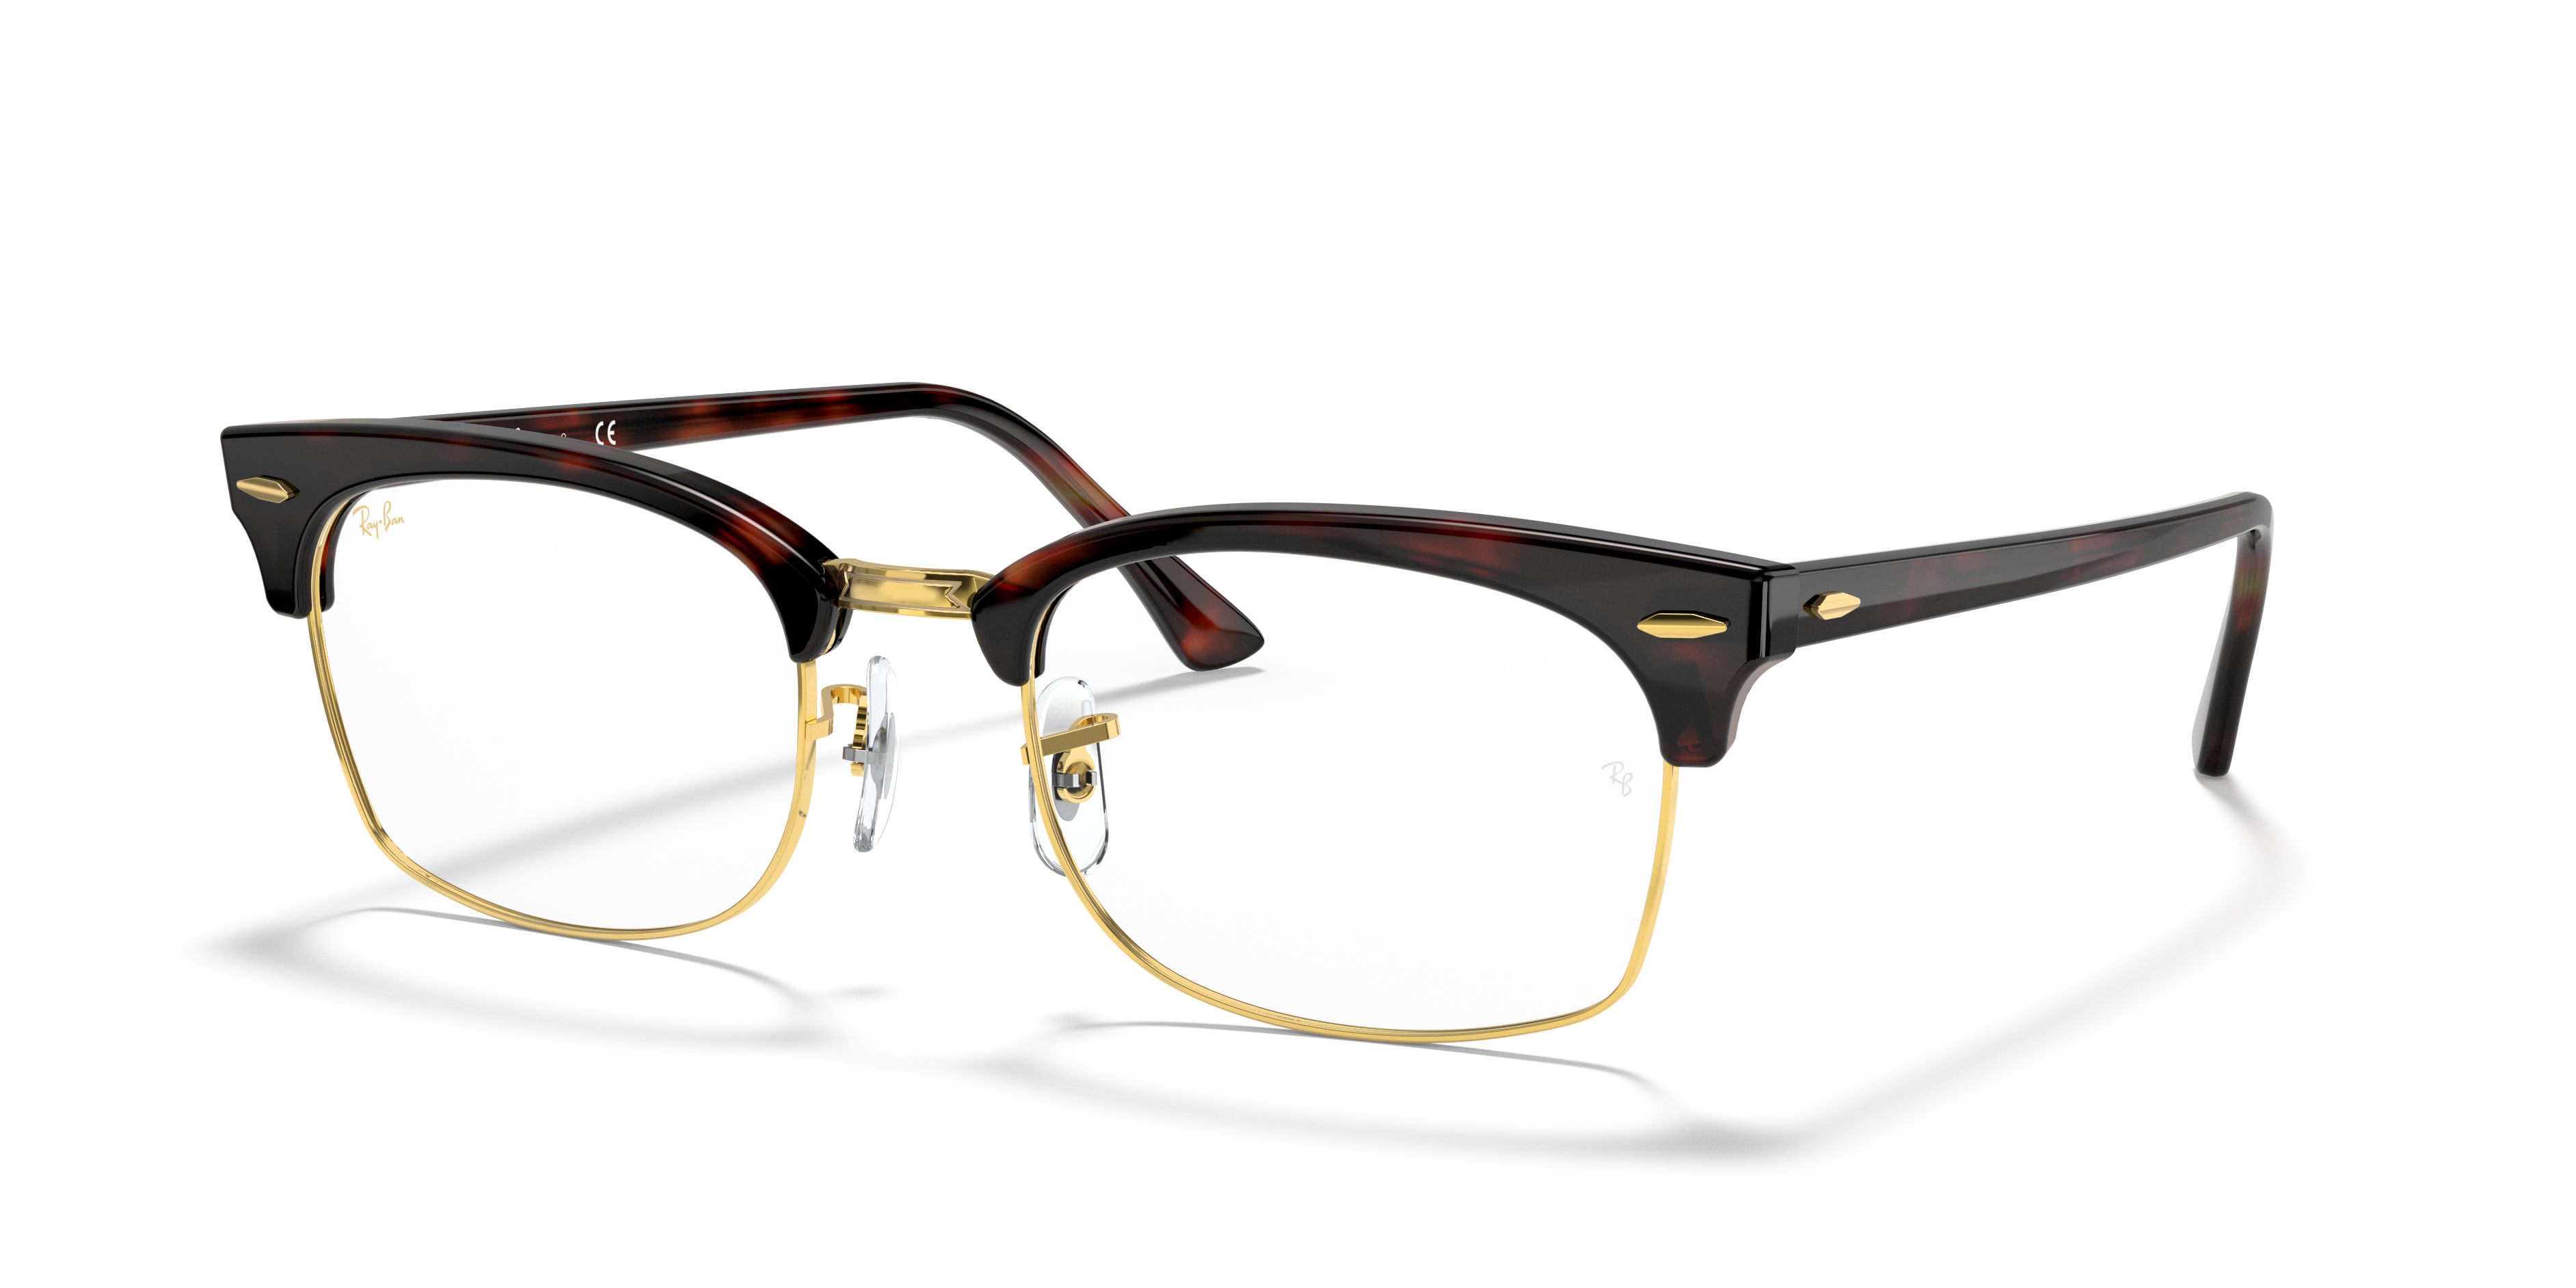 Clubmaster Square Optics Eyeglasses with Tortoise Frame | Ray-Ban®